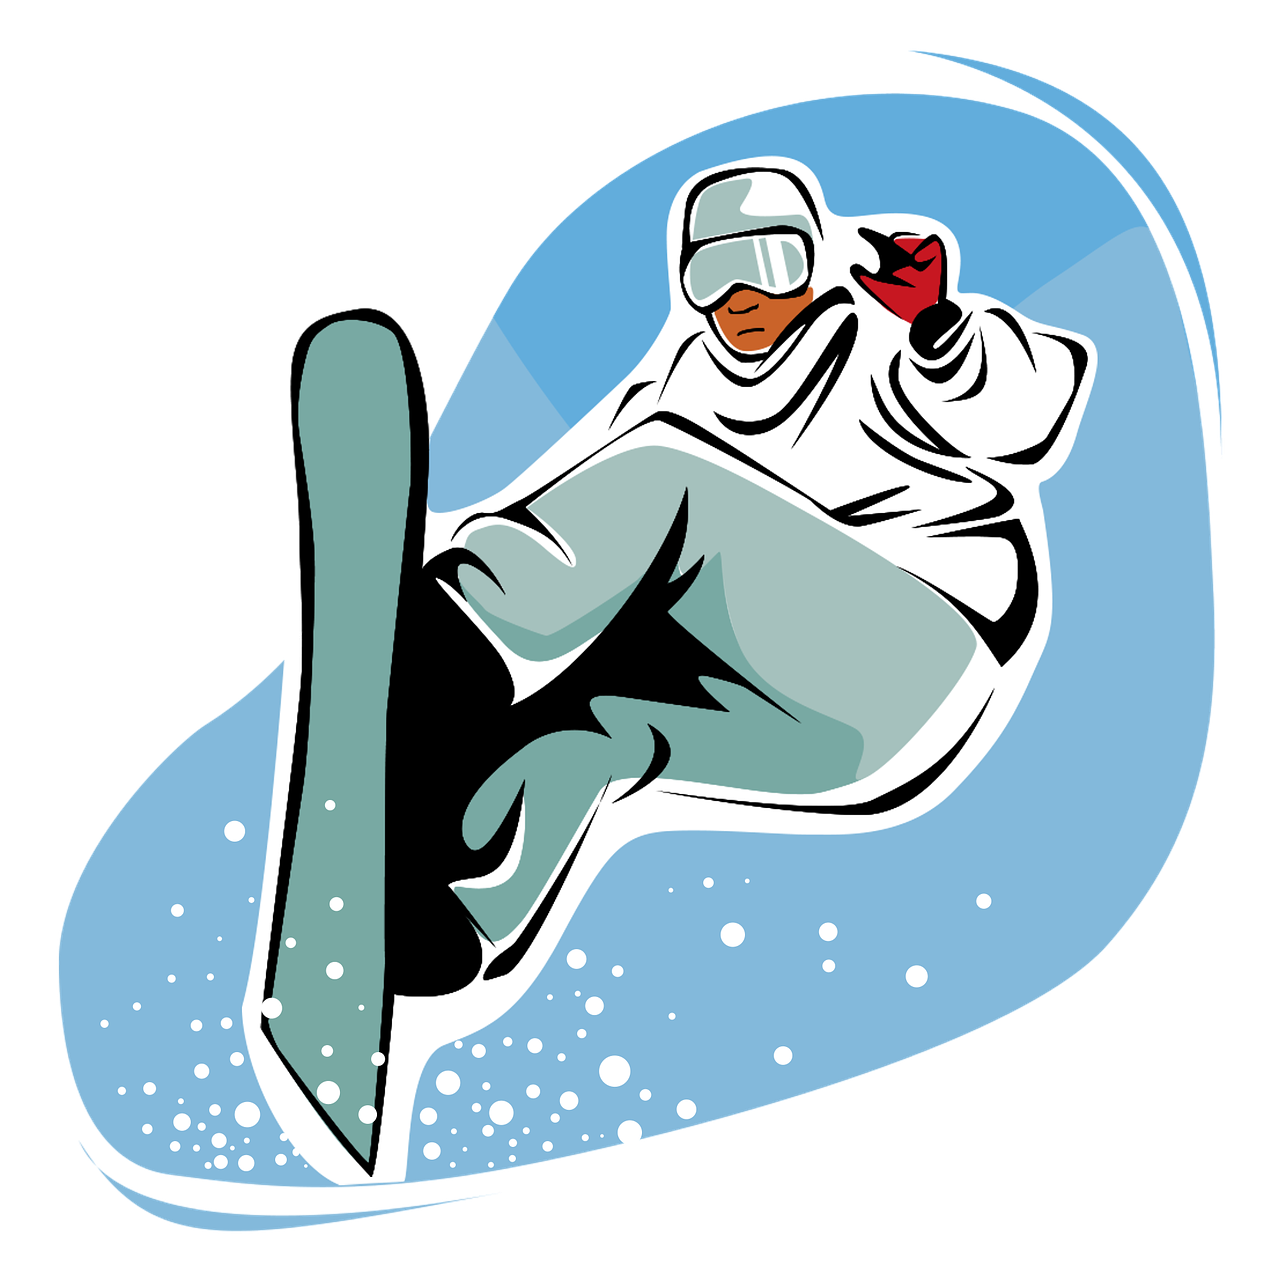 sports snowboard snowboarder free photo